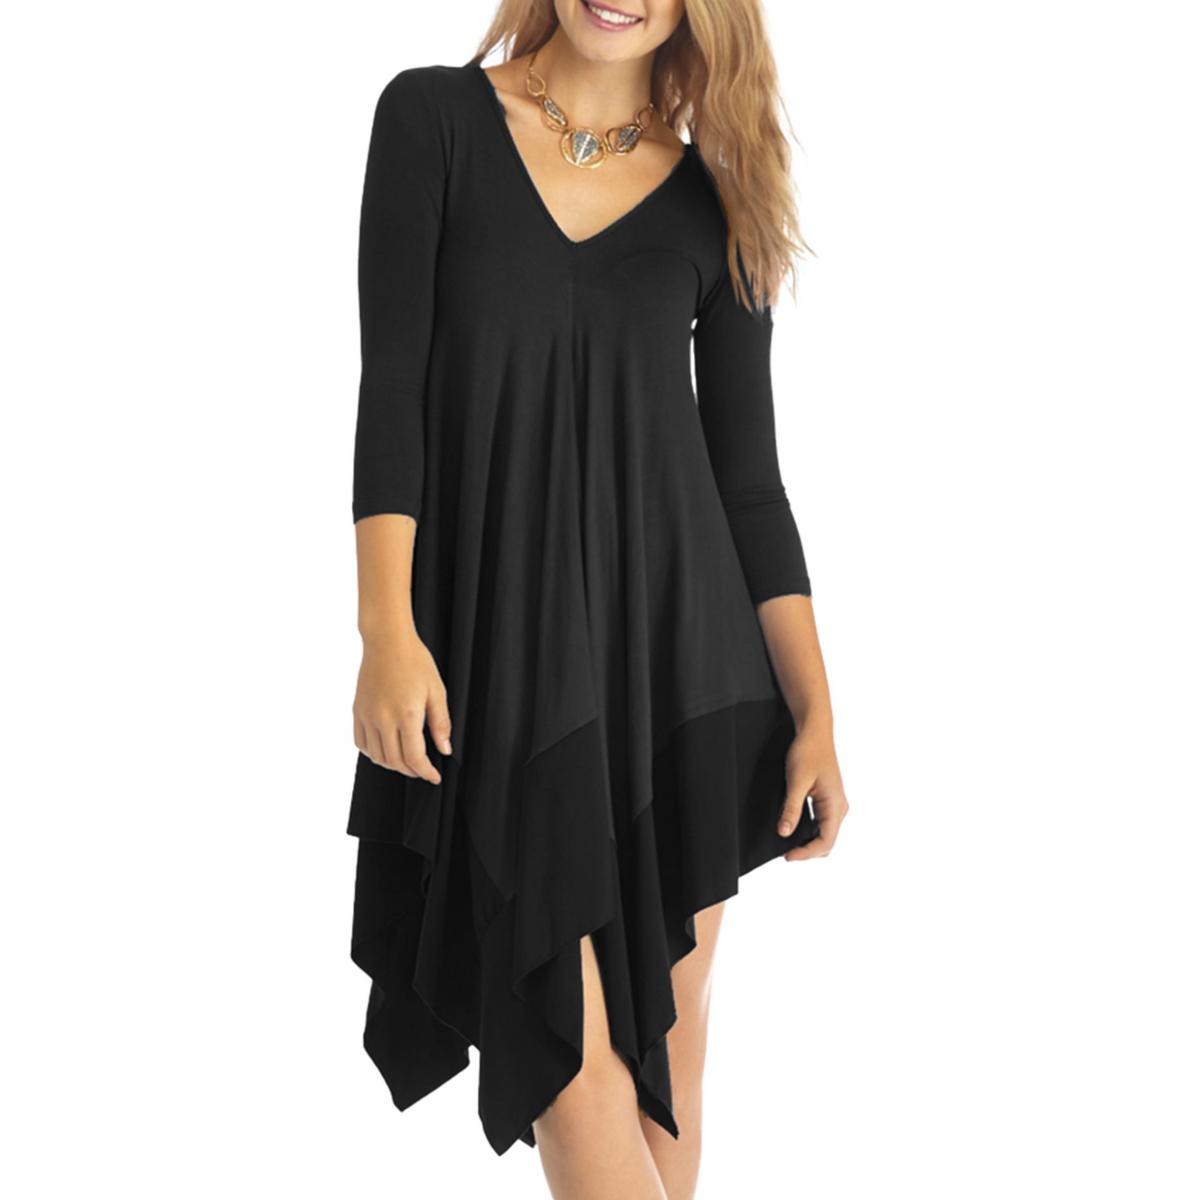 Gracia Womens Knit Maxi Daytime T-Shirt Dress BHFO 3575 | eBay